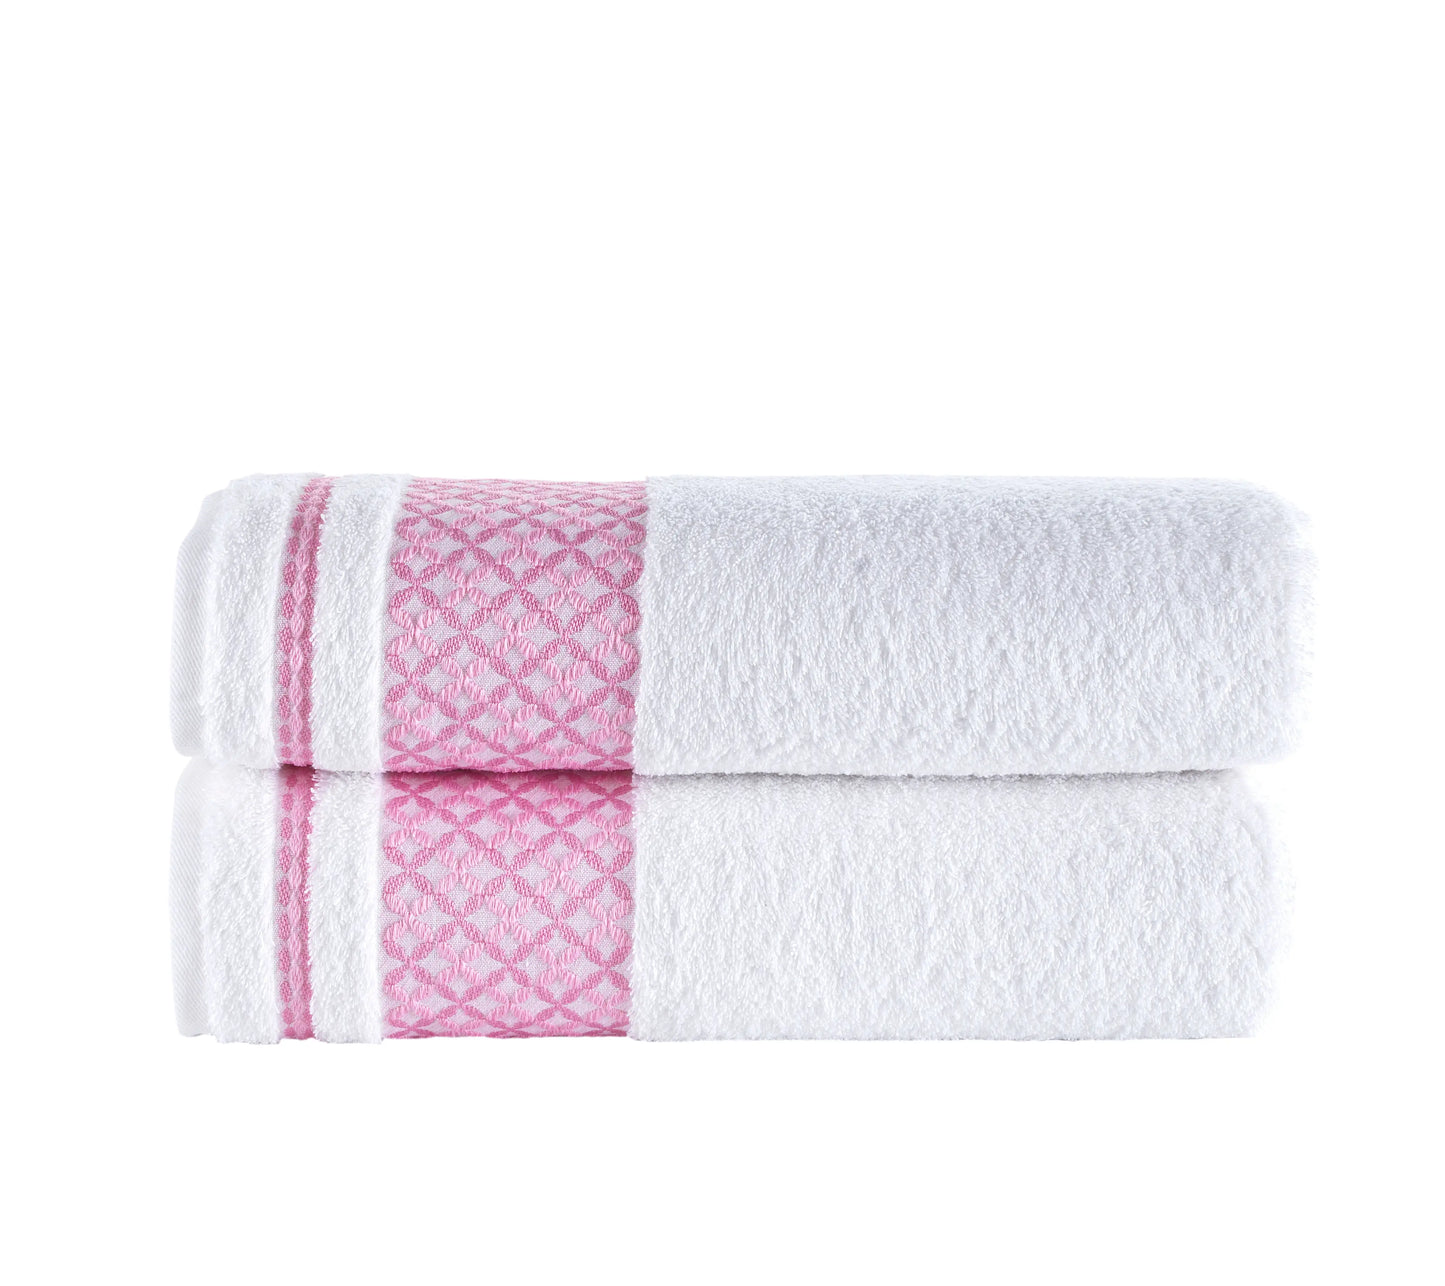 XXL Plaid Bath Towel/Sheet Set of 2 - 100% Turkish Cotton